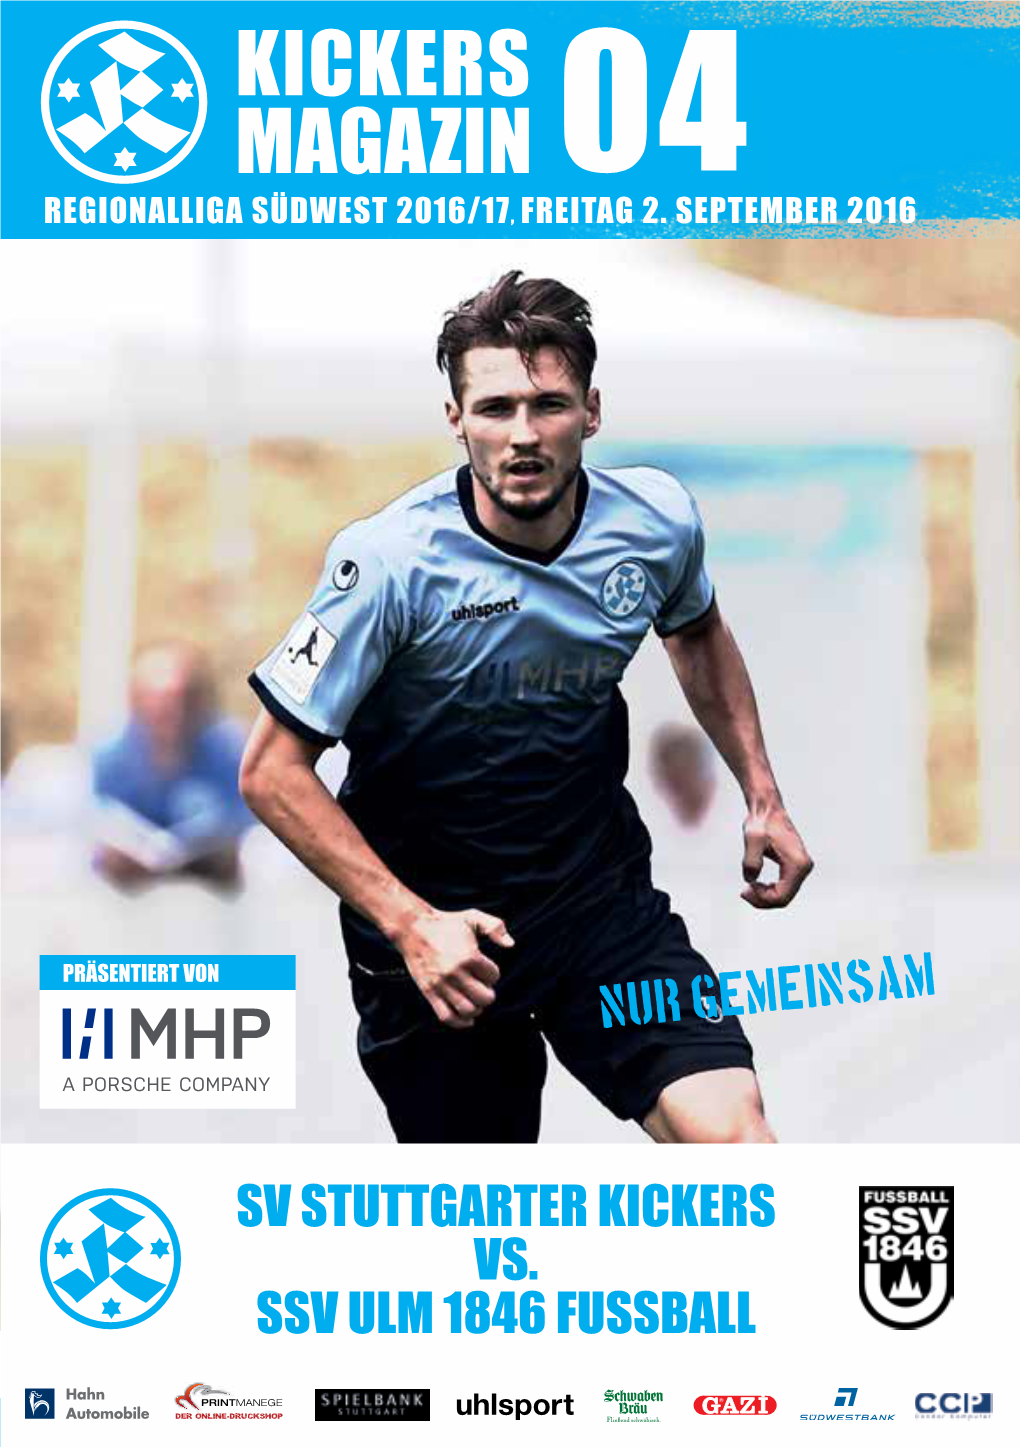 Kickers Magazin 04 Regionalliga Südwest 2016/17, Freitag 2